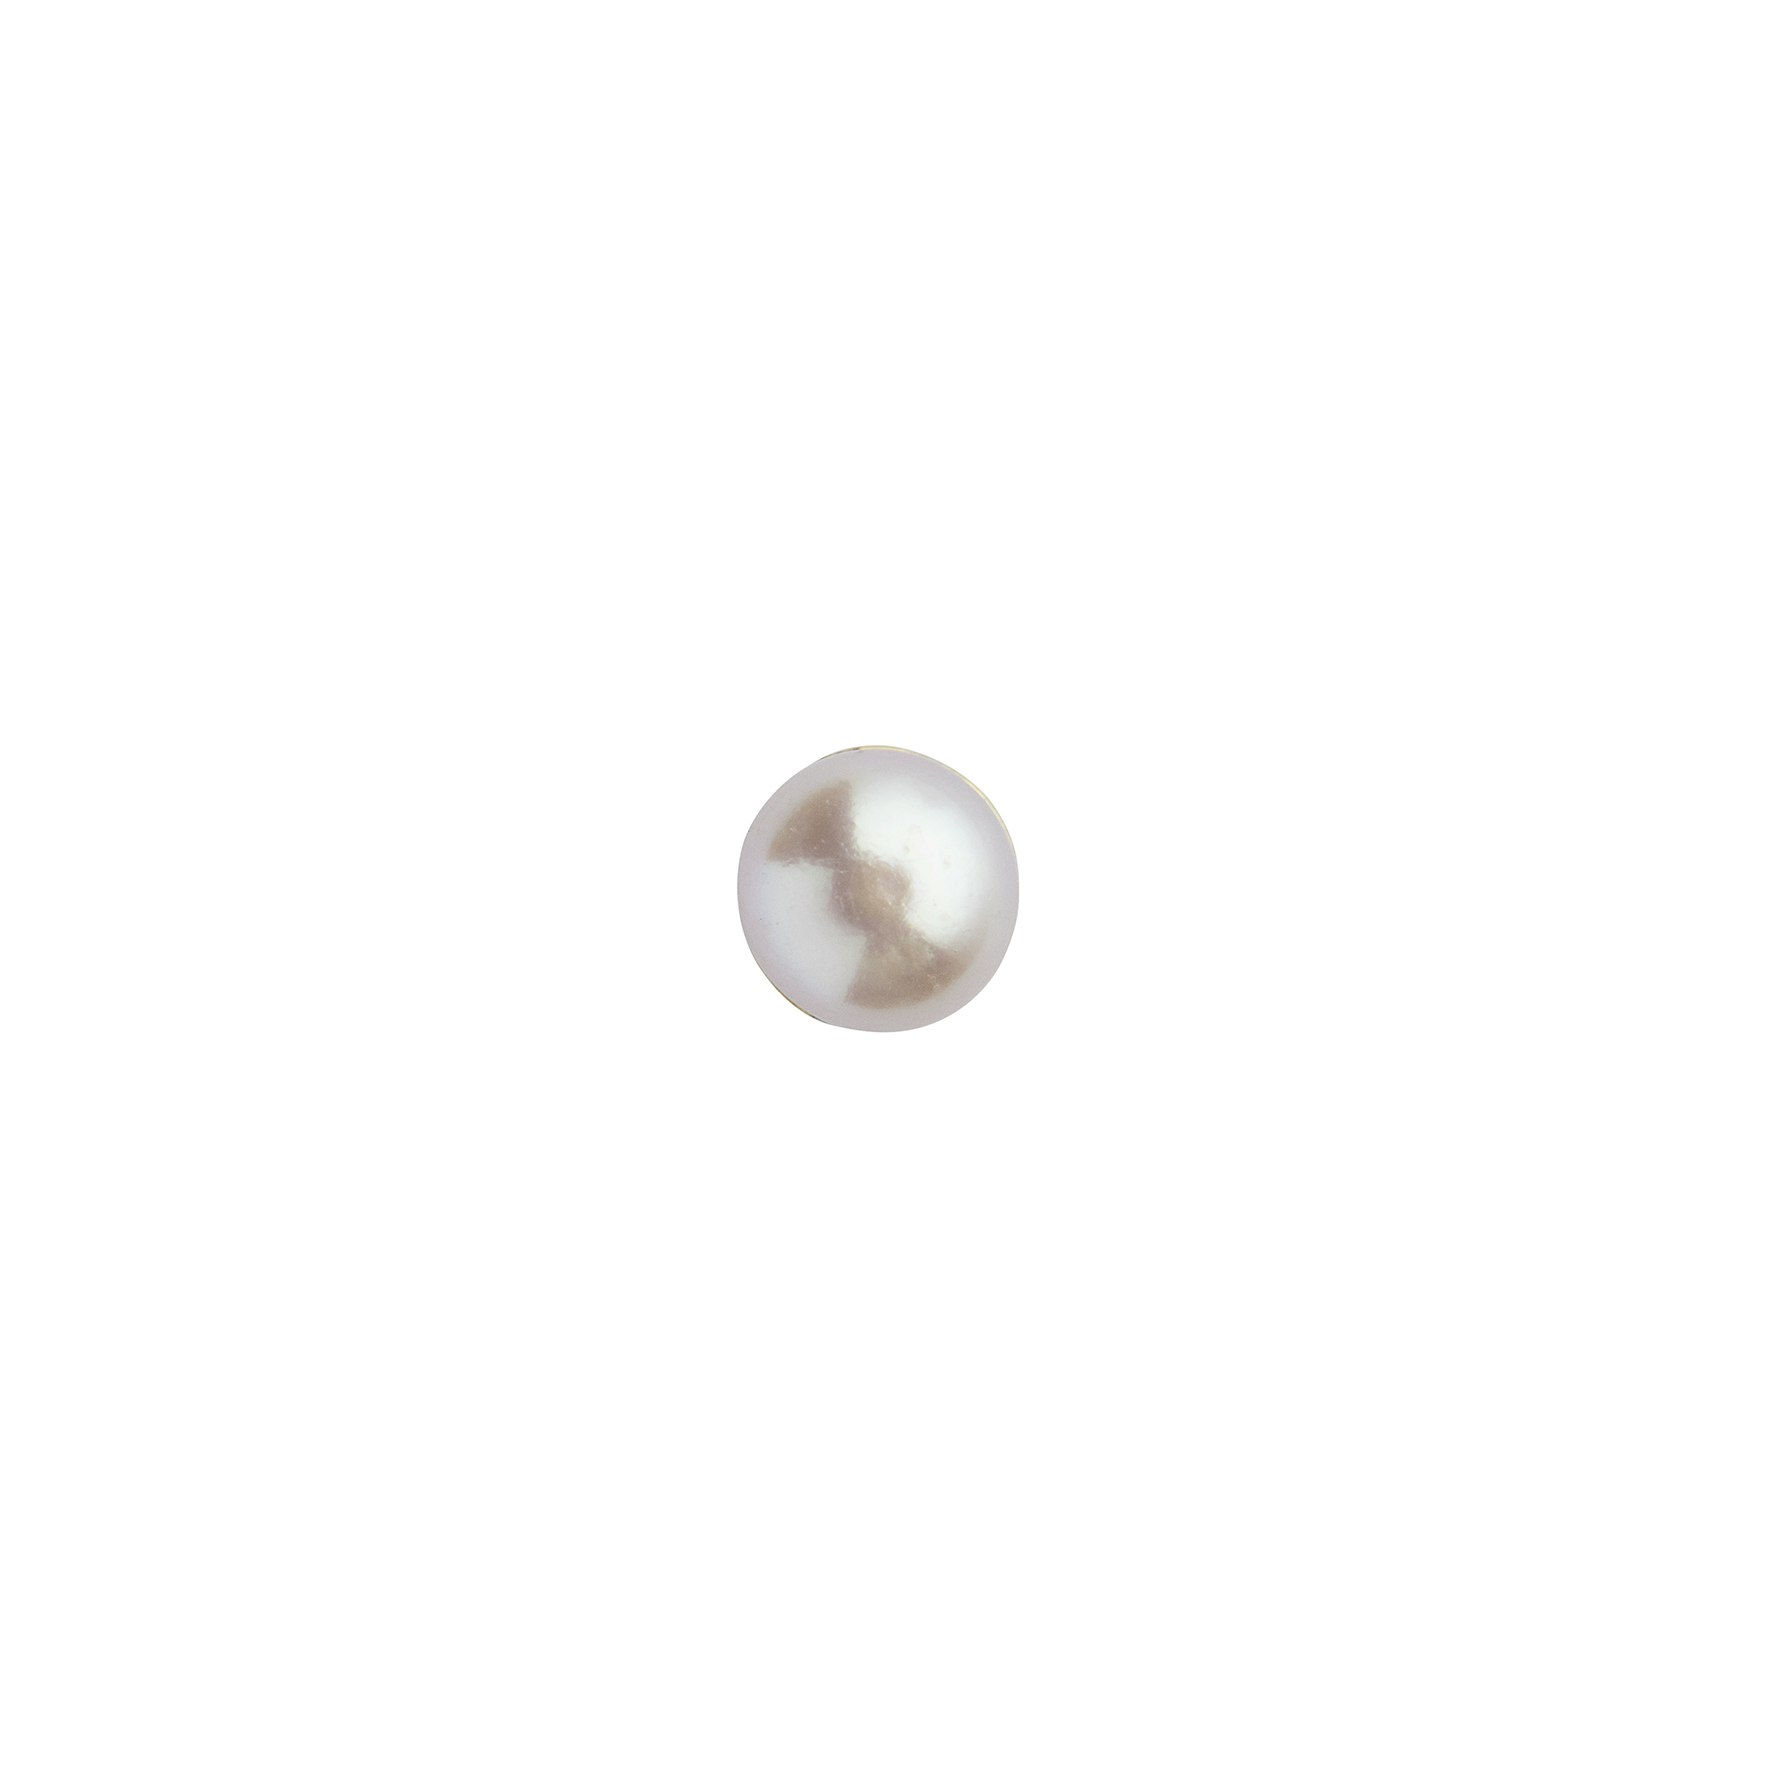 Tres Petit Pearl Earstick fra STINE A Jewelry i Forgylt-Sølv Sterling 925